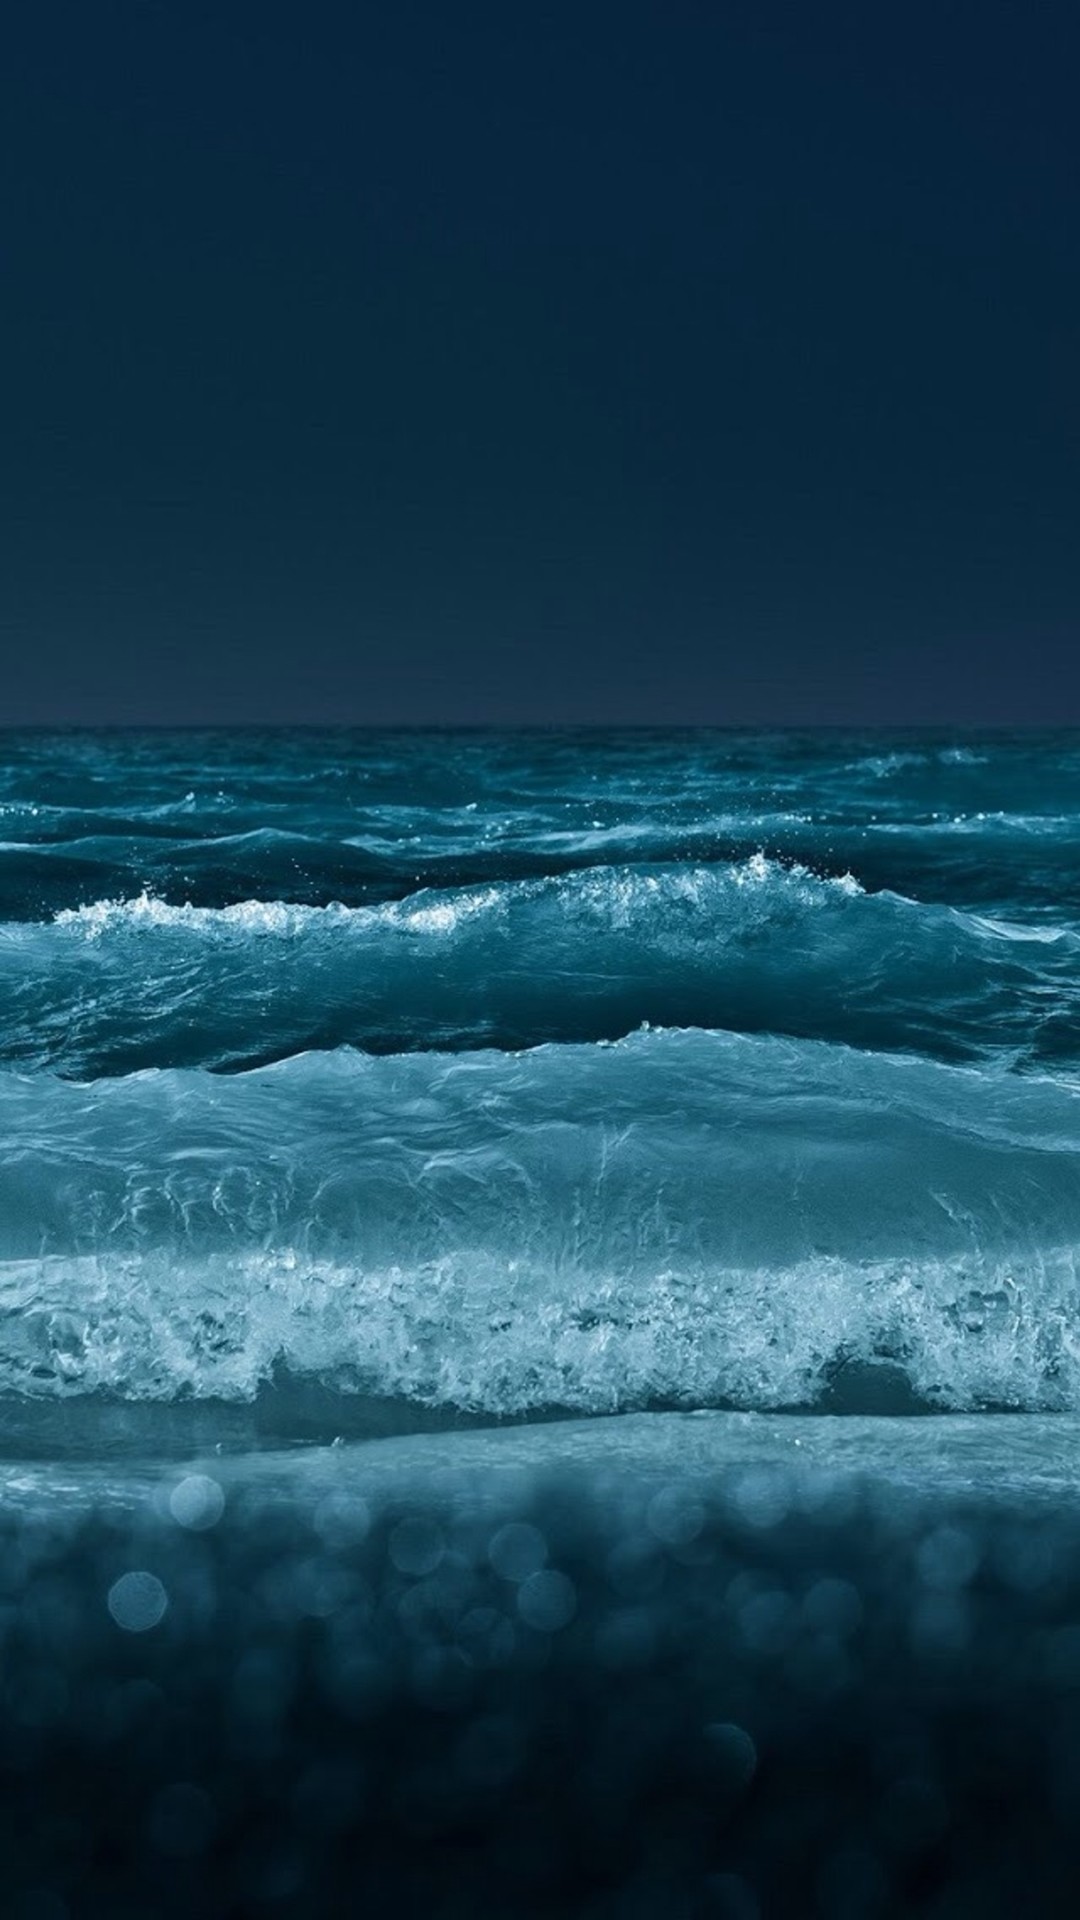 1080x1920 Natur Nacht Ocean Beach Wave Bokeh iPhone 8 Plus Wallpaper